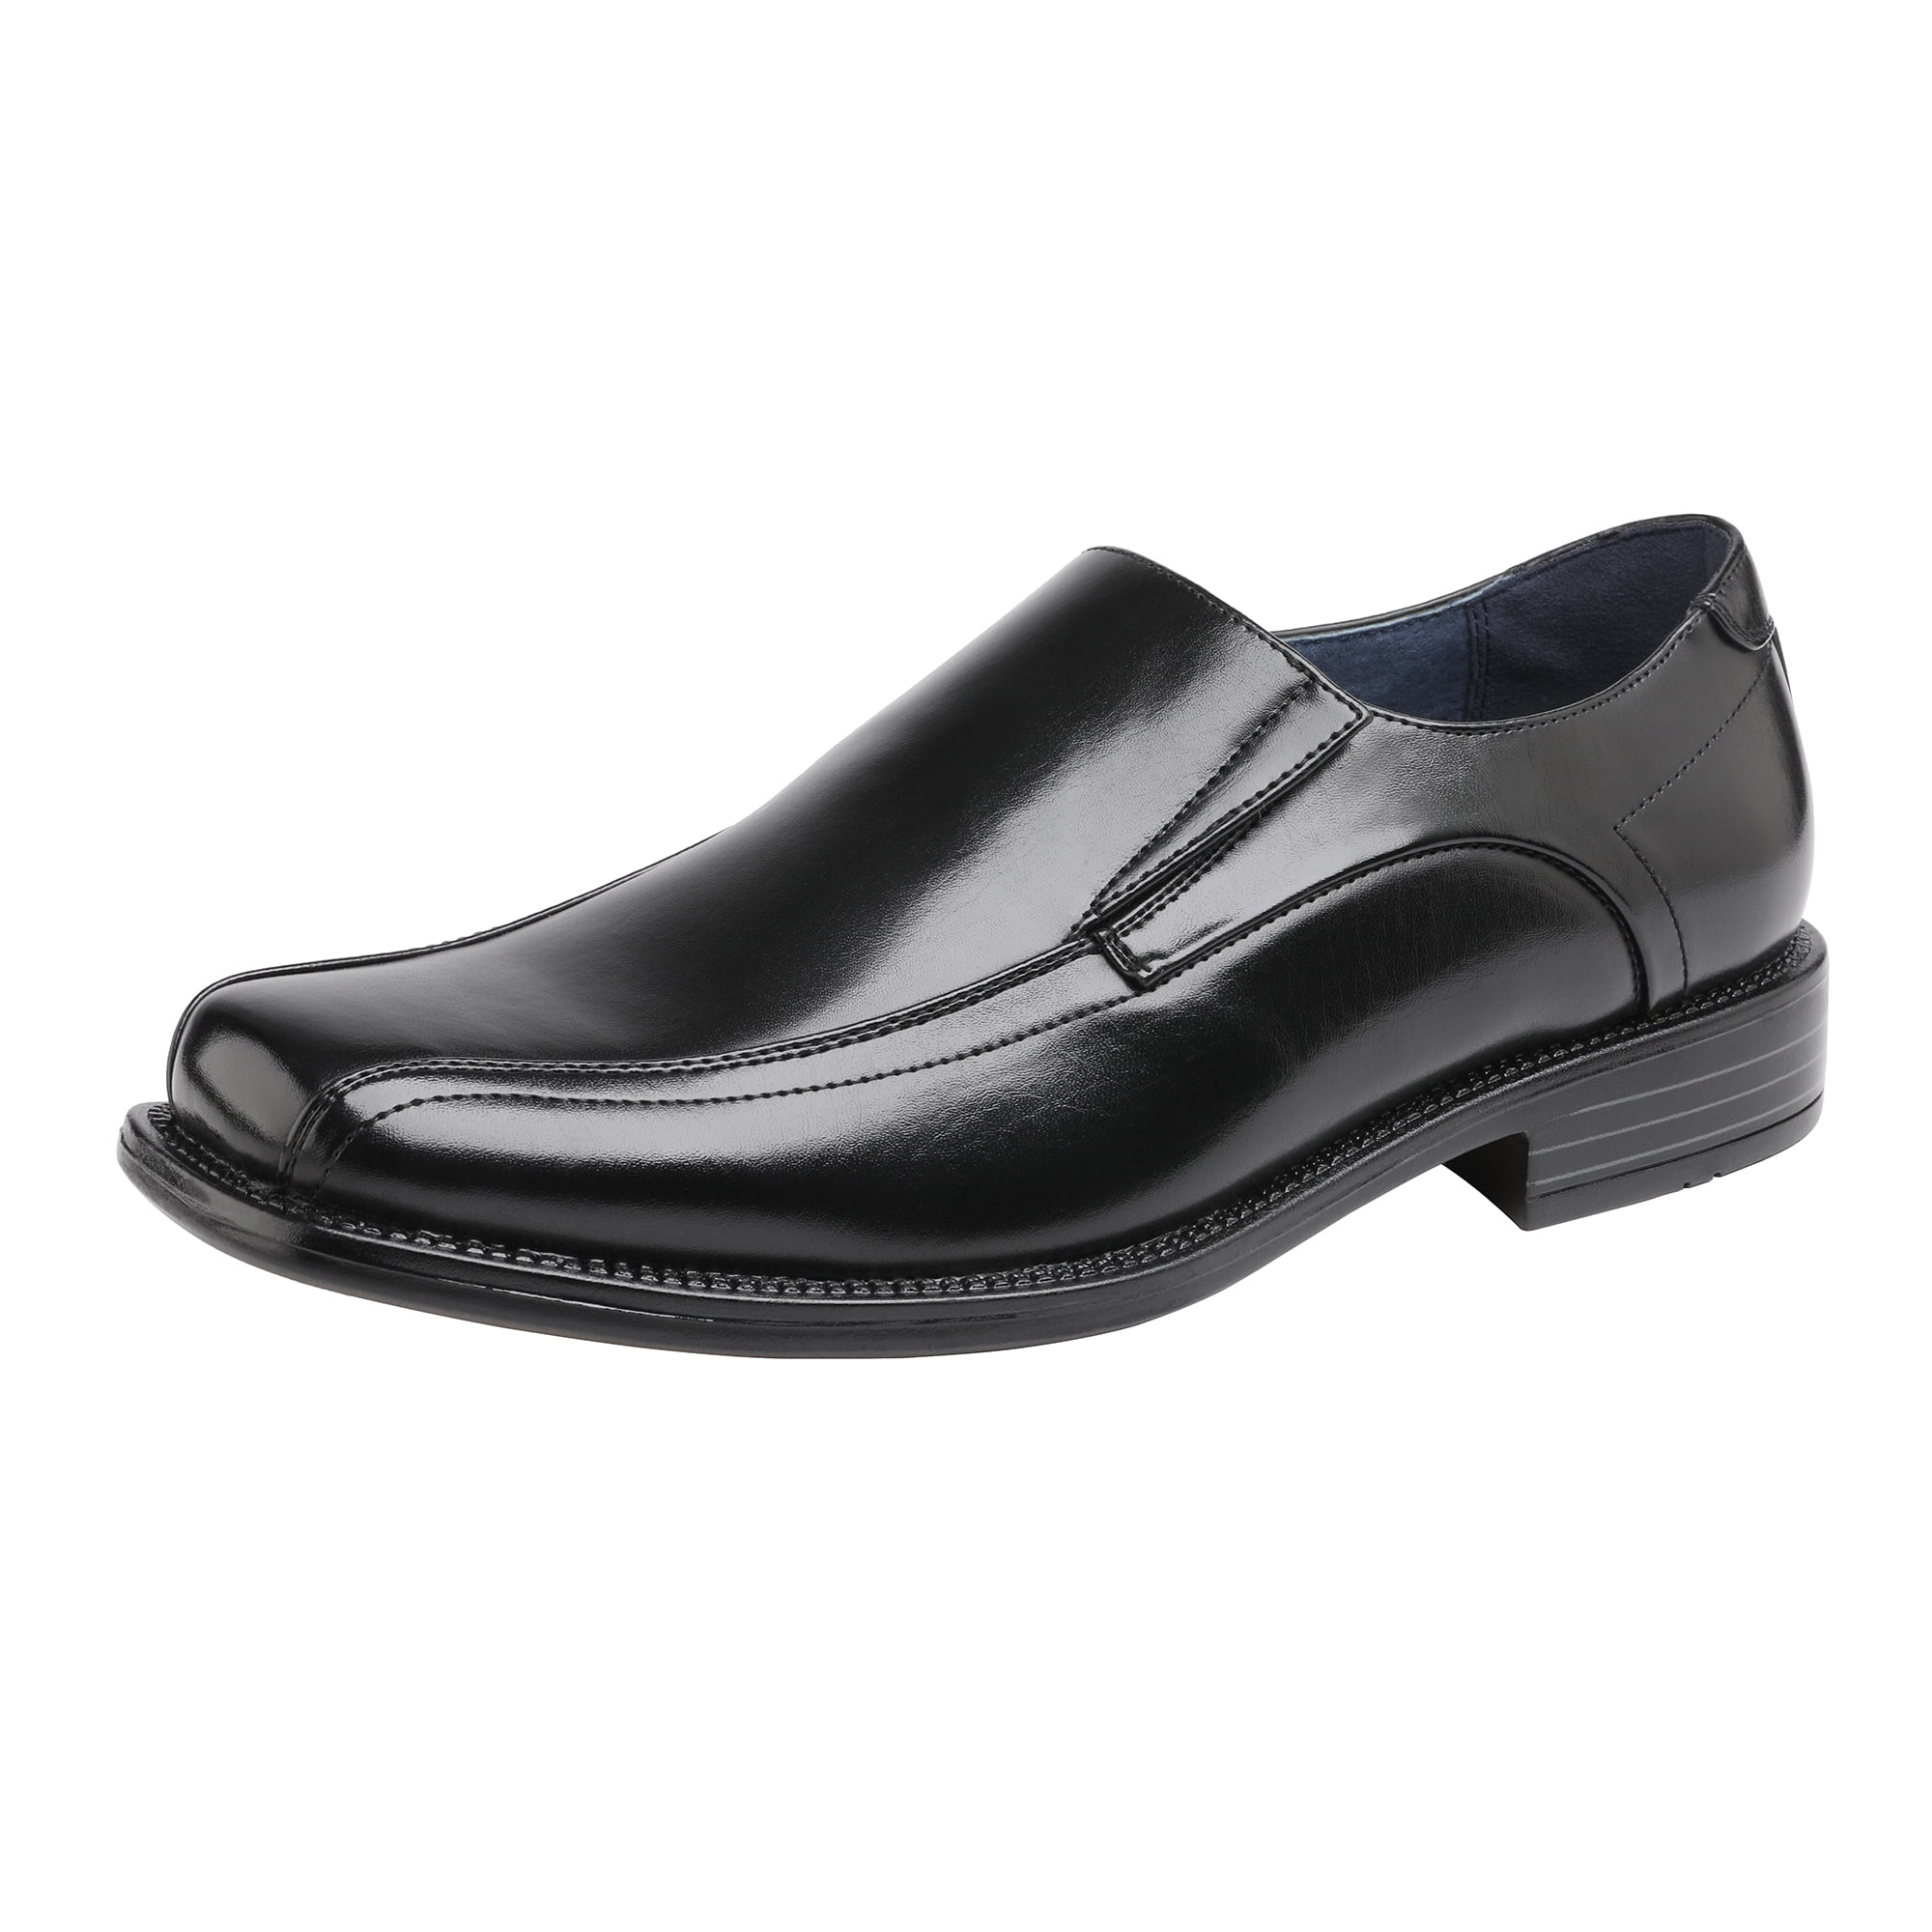 Mens Formal Shoes Black Lace up Classic Smart Dress Office Shoes UK Size 7- 12 | eBay